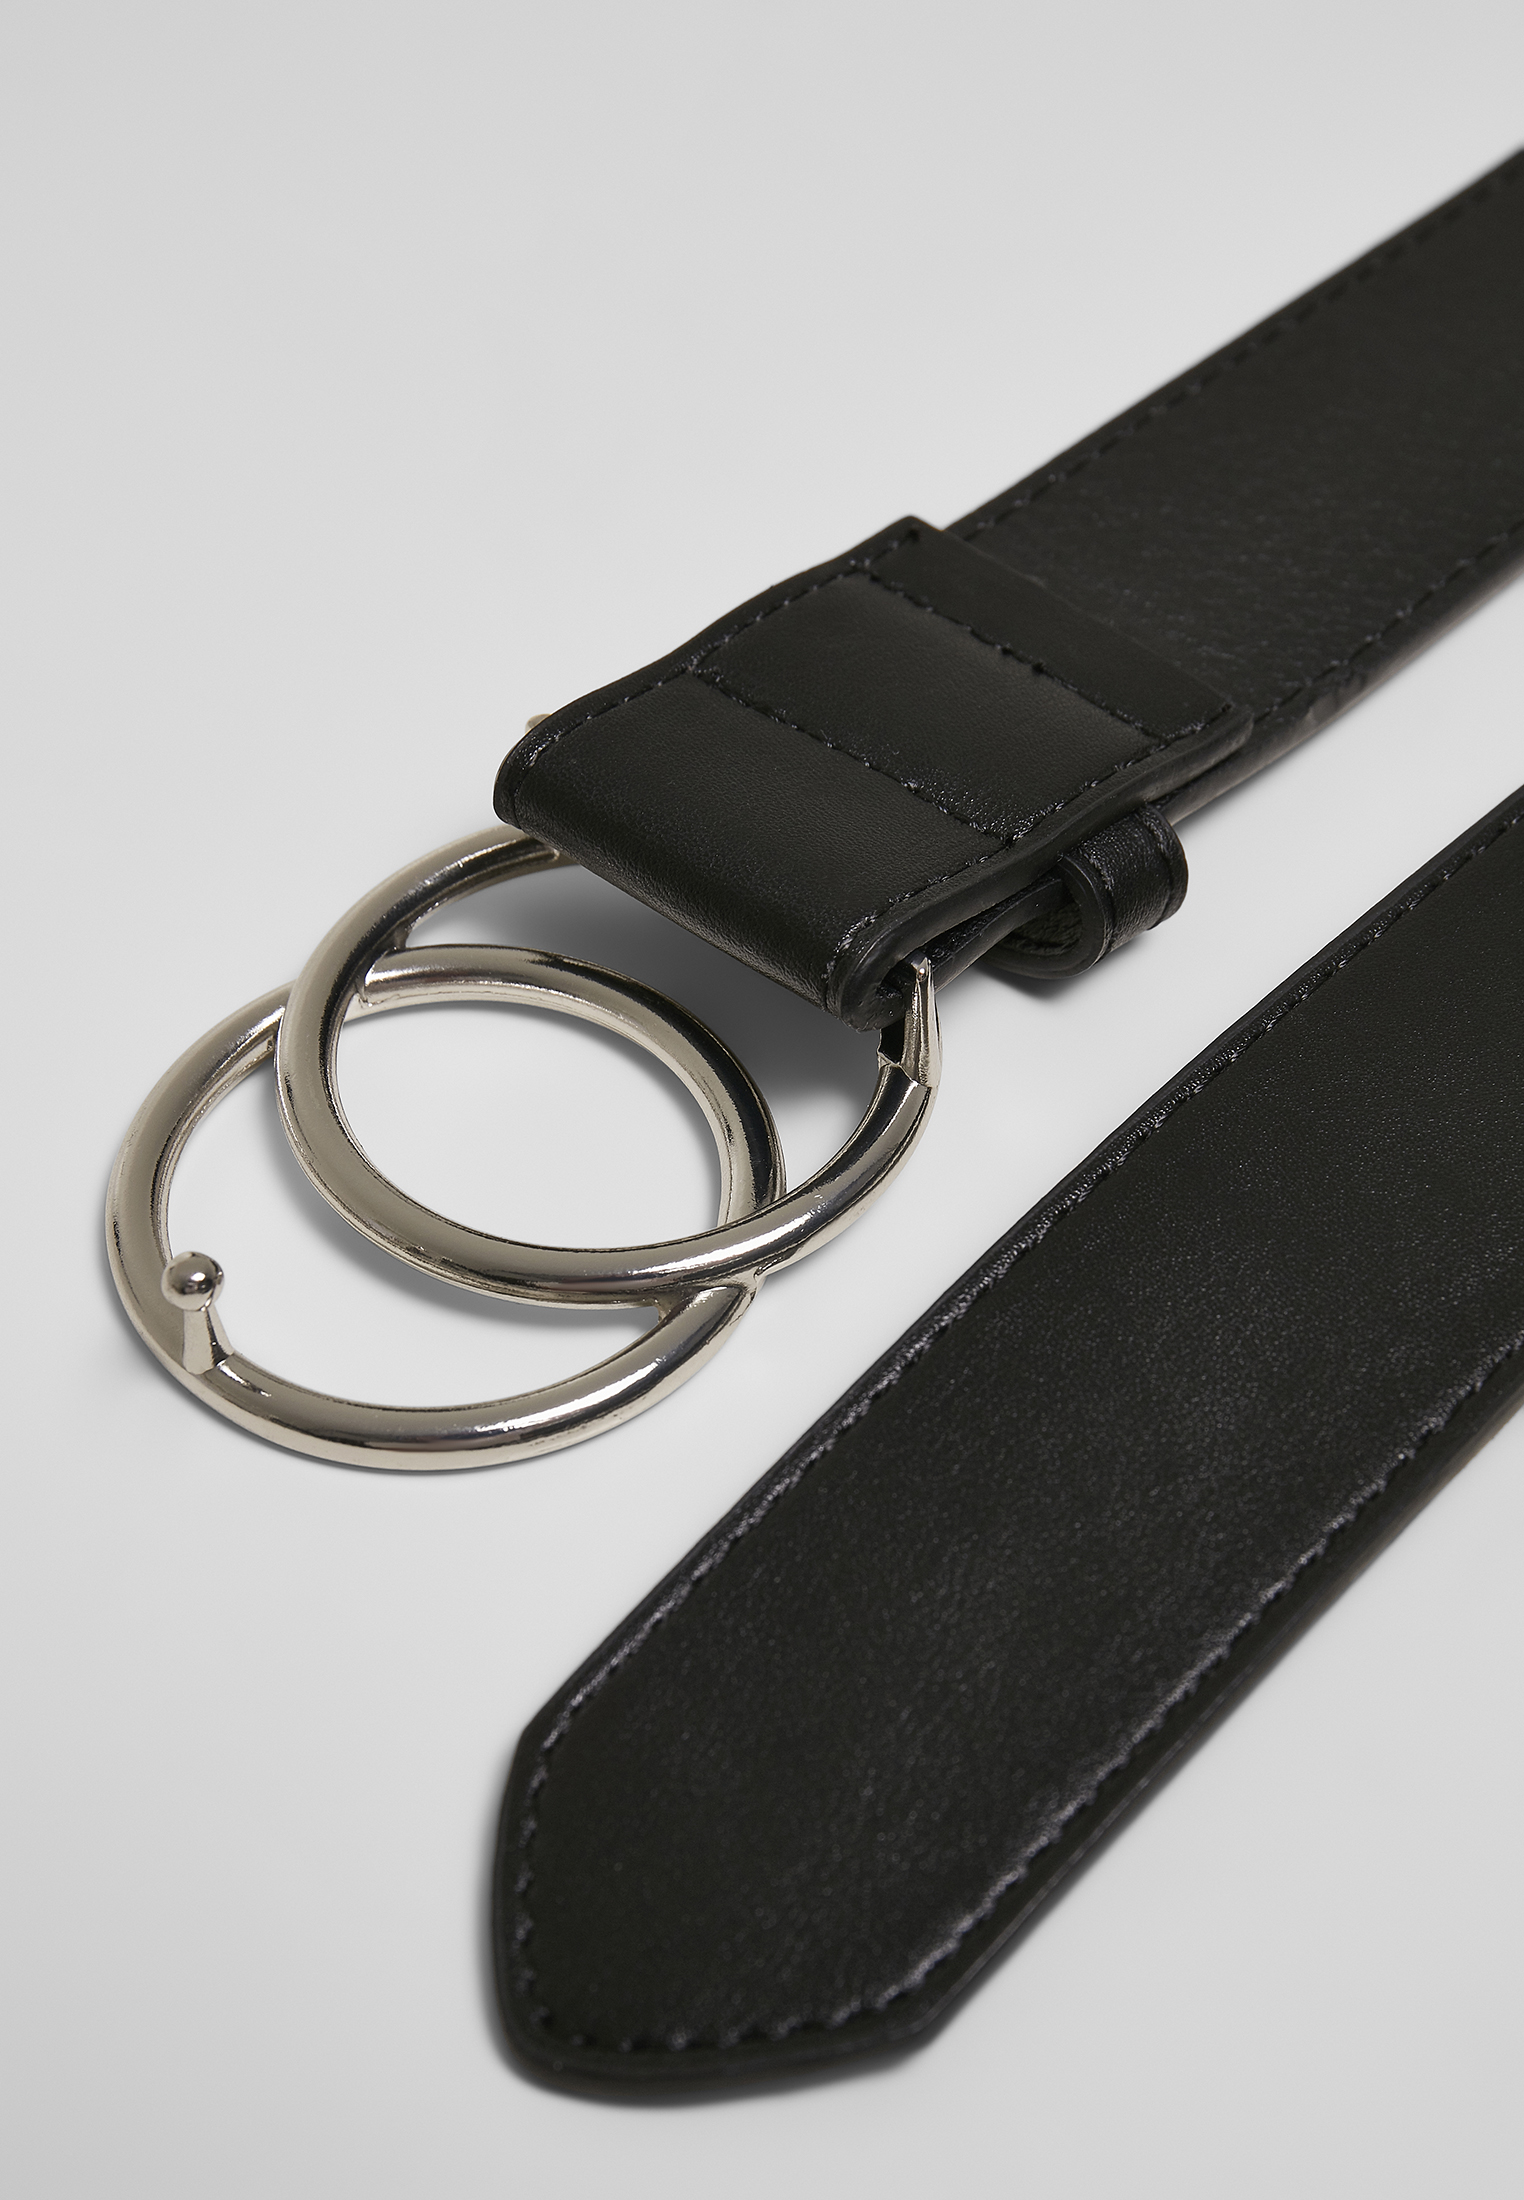 G?rtel Ring Buckle Belt in Farbe black/silver